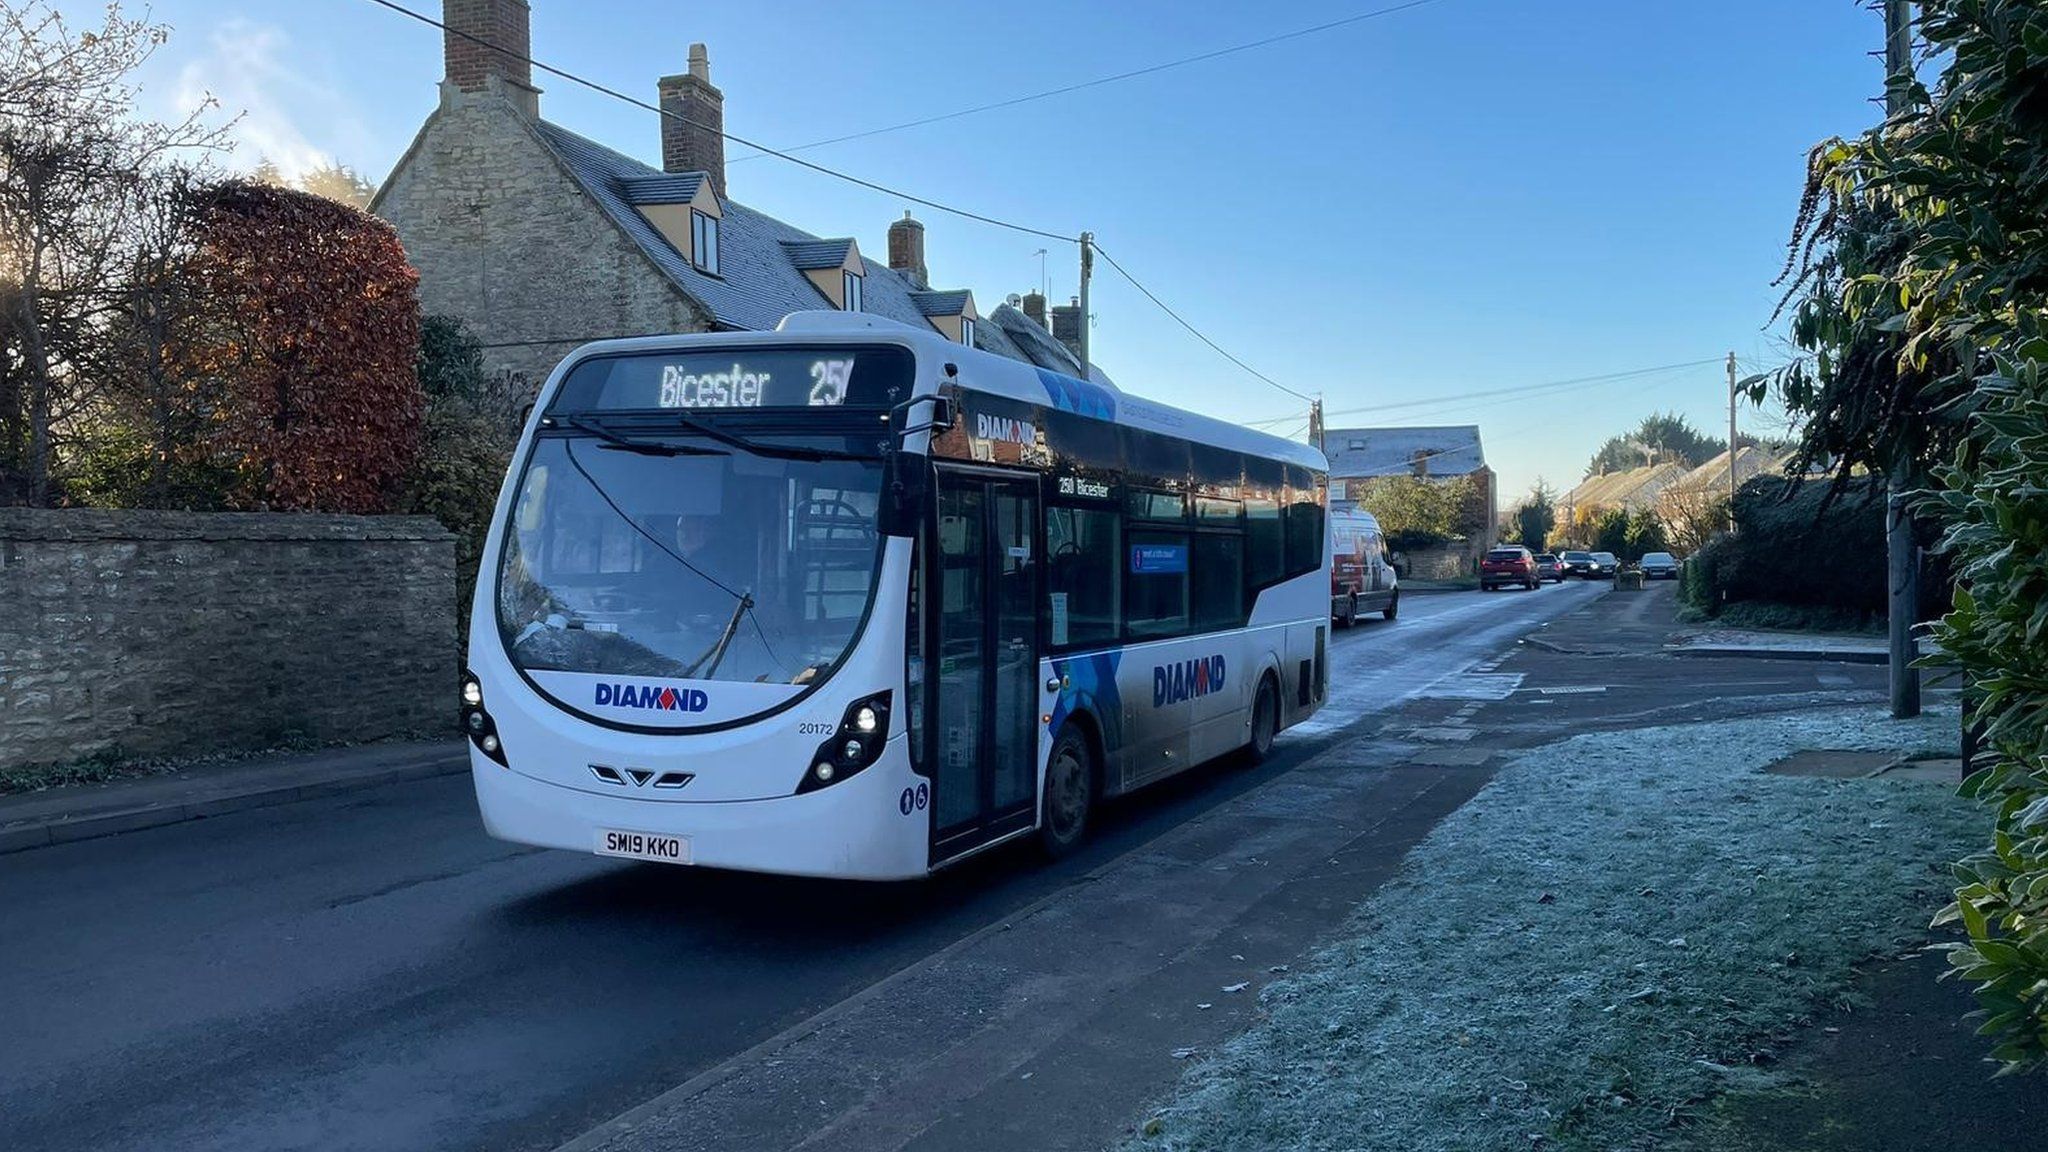 250 bus service in Kirtlington